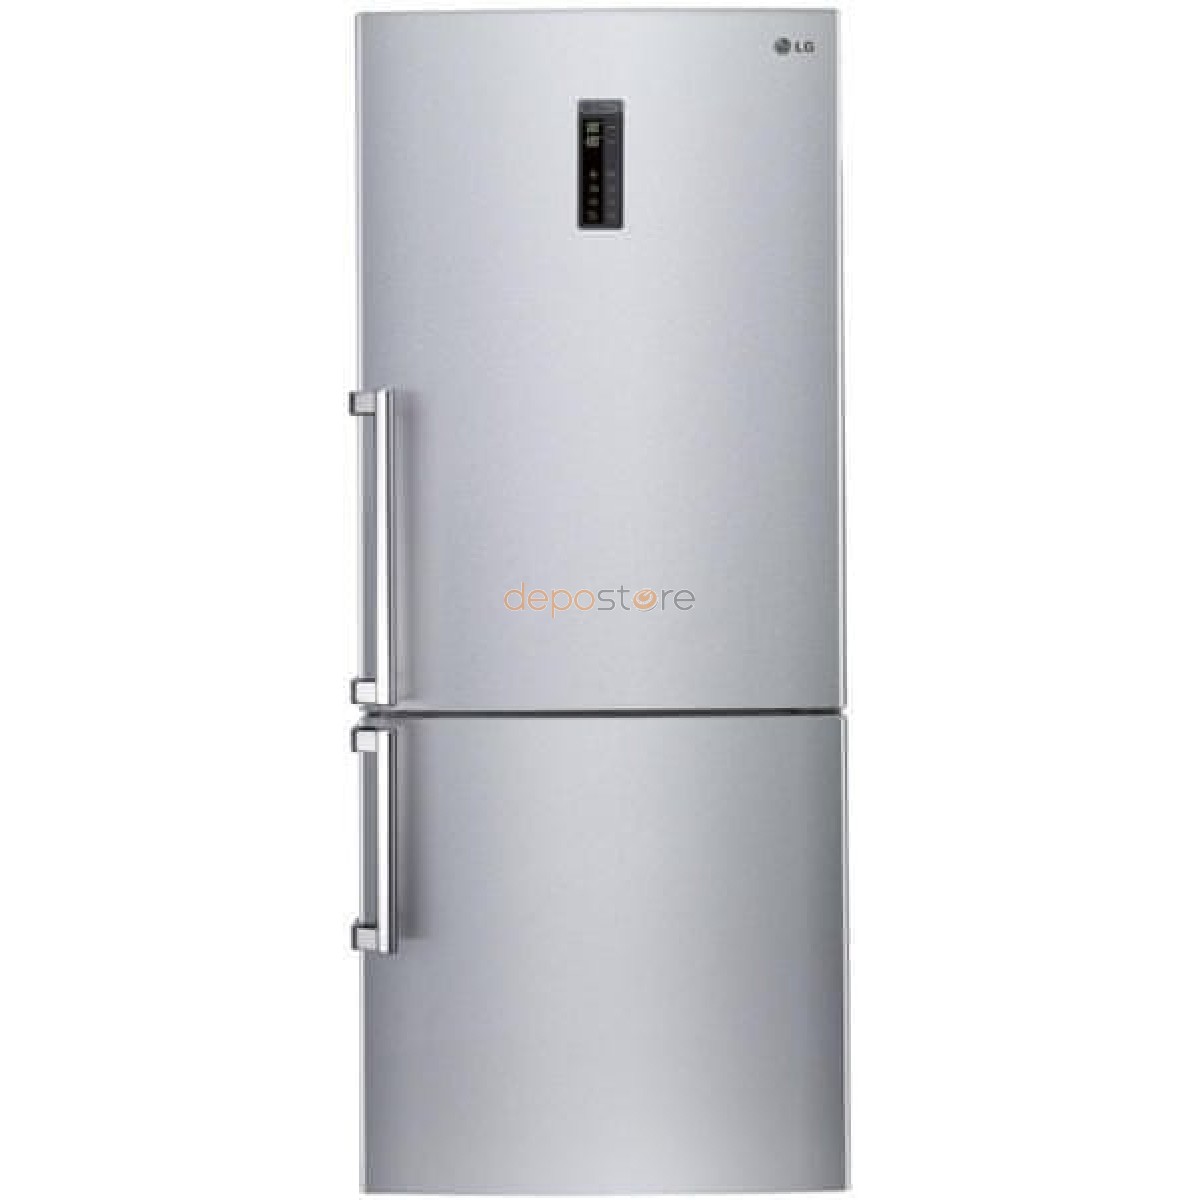 Двухкамерный холодильник lg no frost. LG GC-f689blcm. LG GC-b559. Холодильник LG DOORCOOLING+ ga-b459smum. GC-f689blcm.